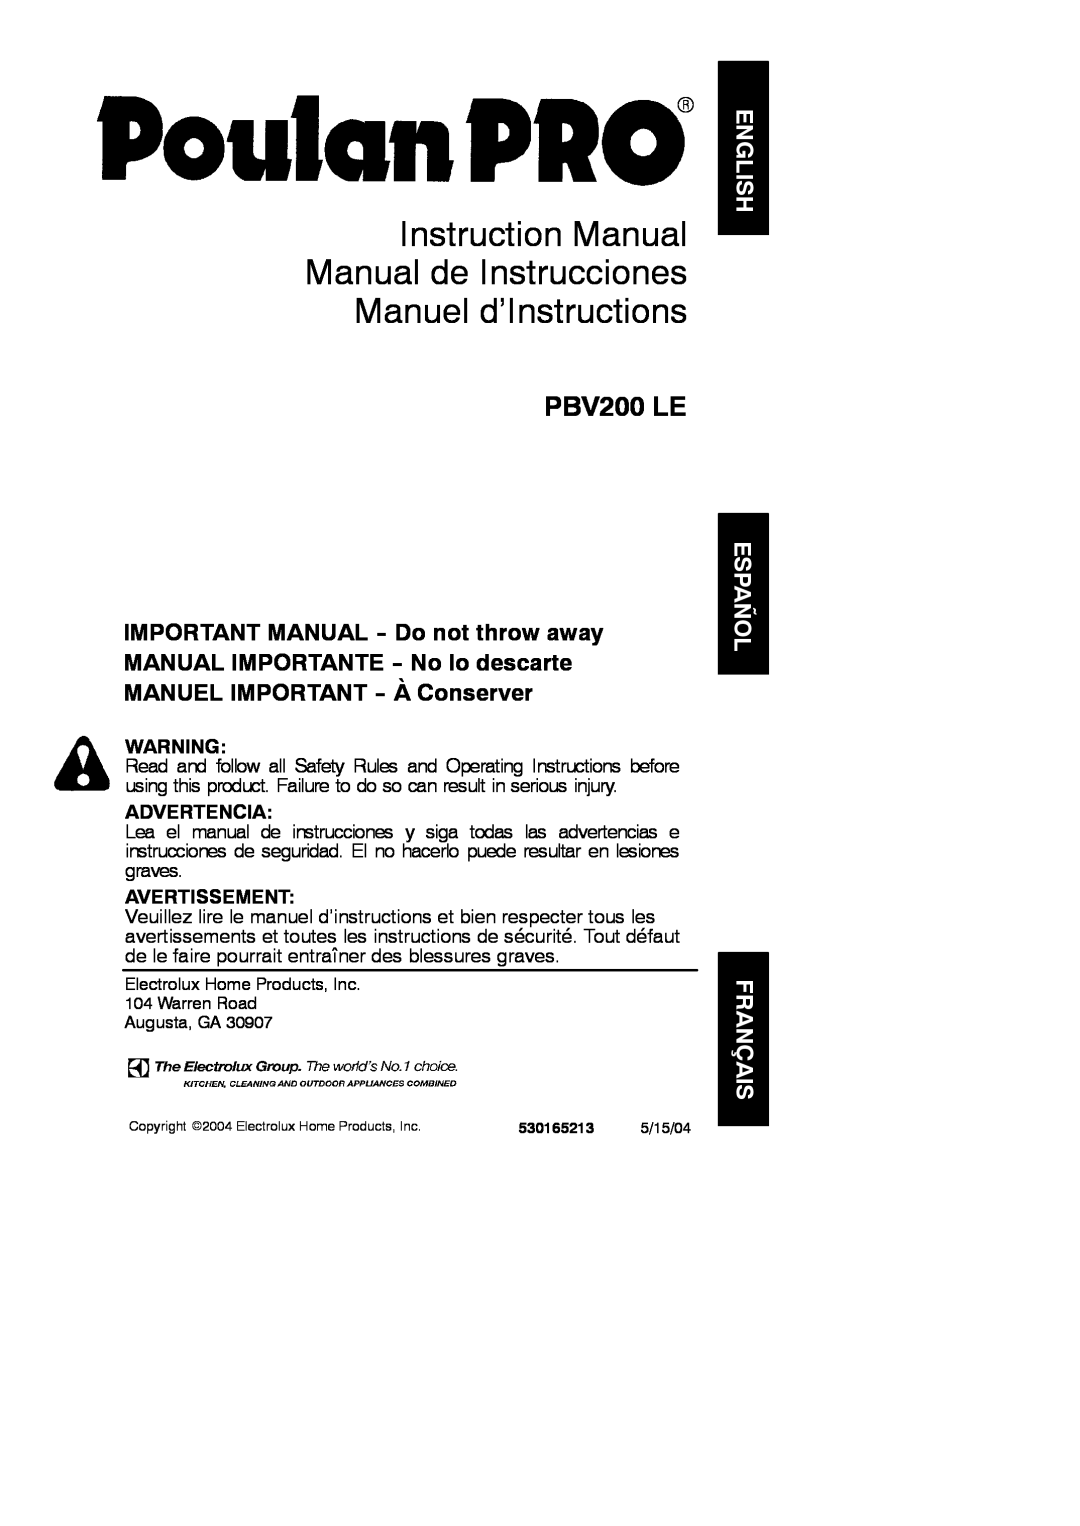 Poulan 530165213 instruction manual PBV200 LE, English, Español Français, Advertencia, Avertissement 